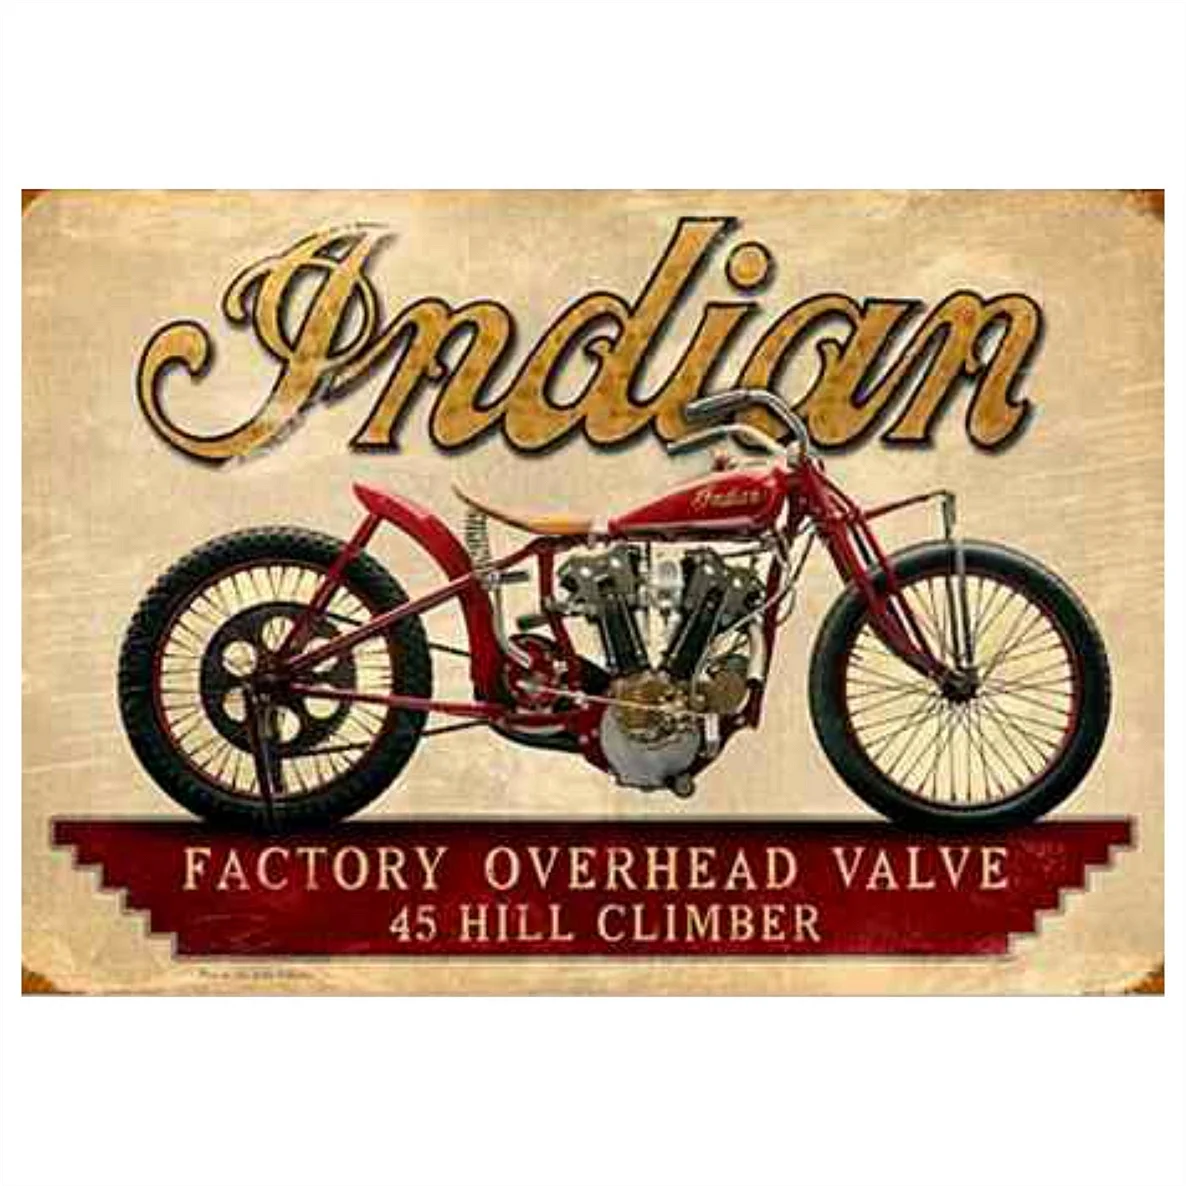 Мотоцикл indian Scout старый Постер